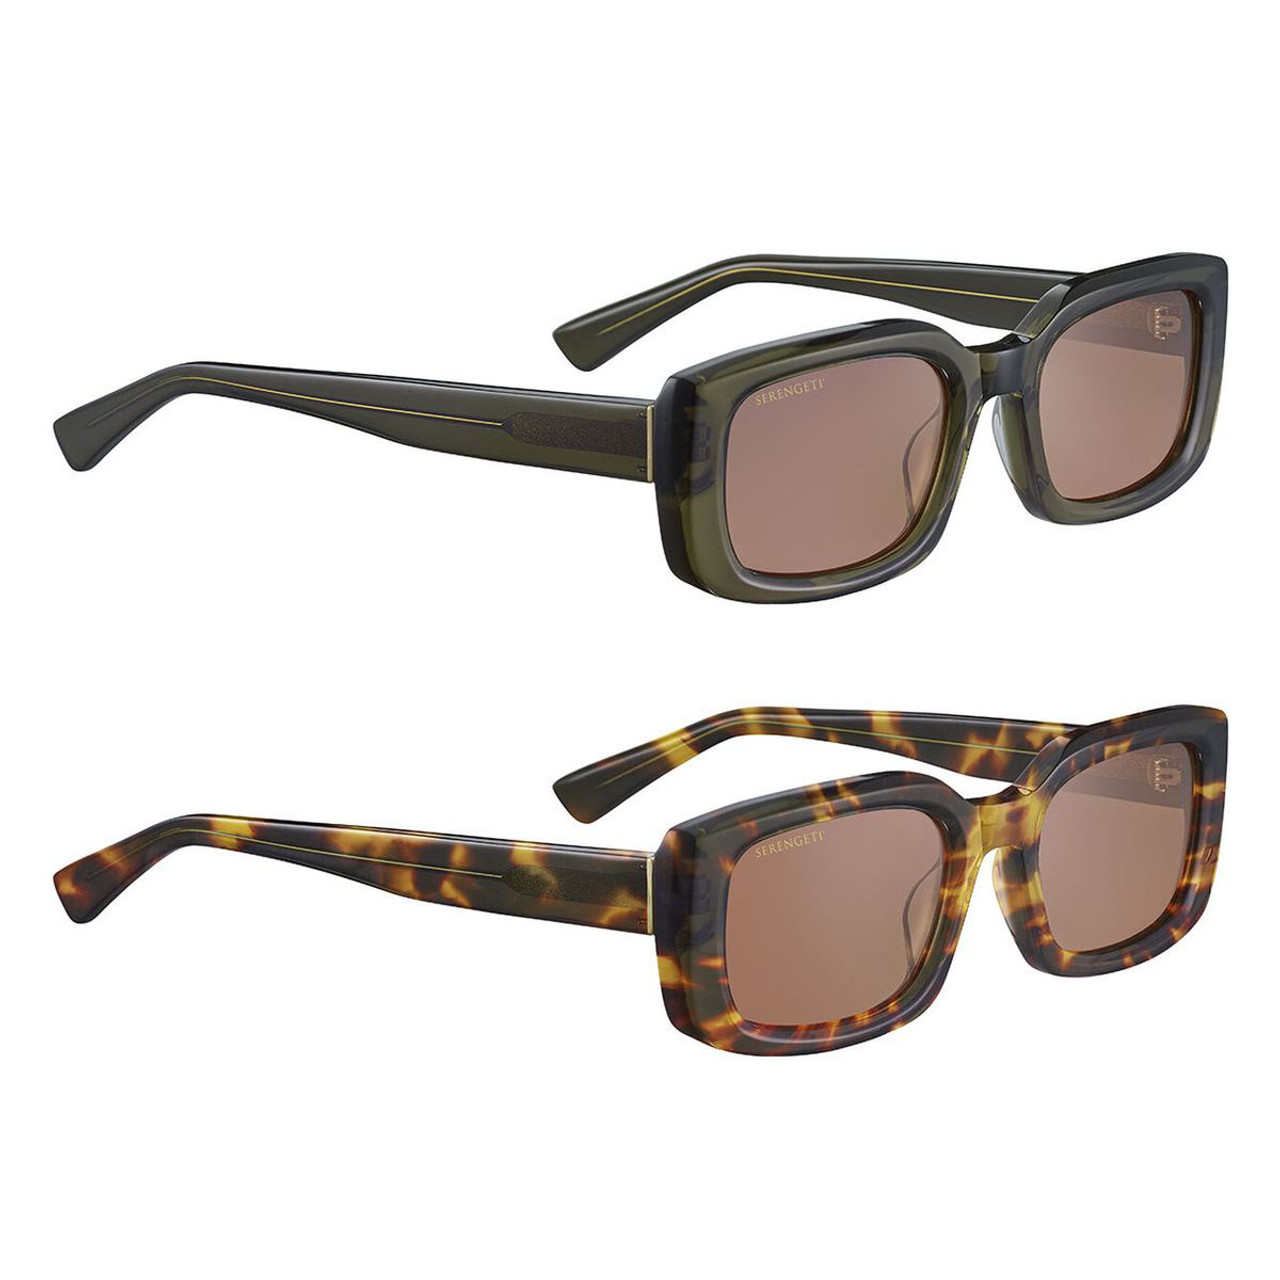 Serengeti® NICHOLSON Unisex Sunglasses product image